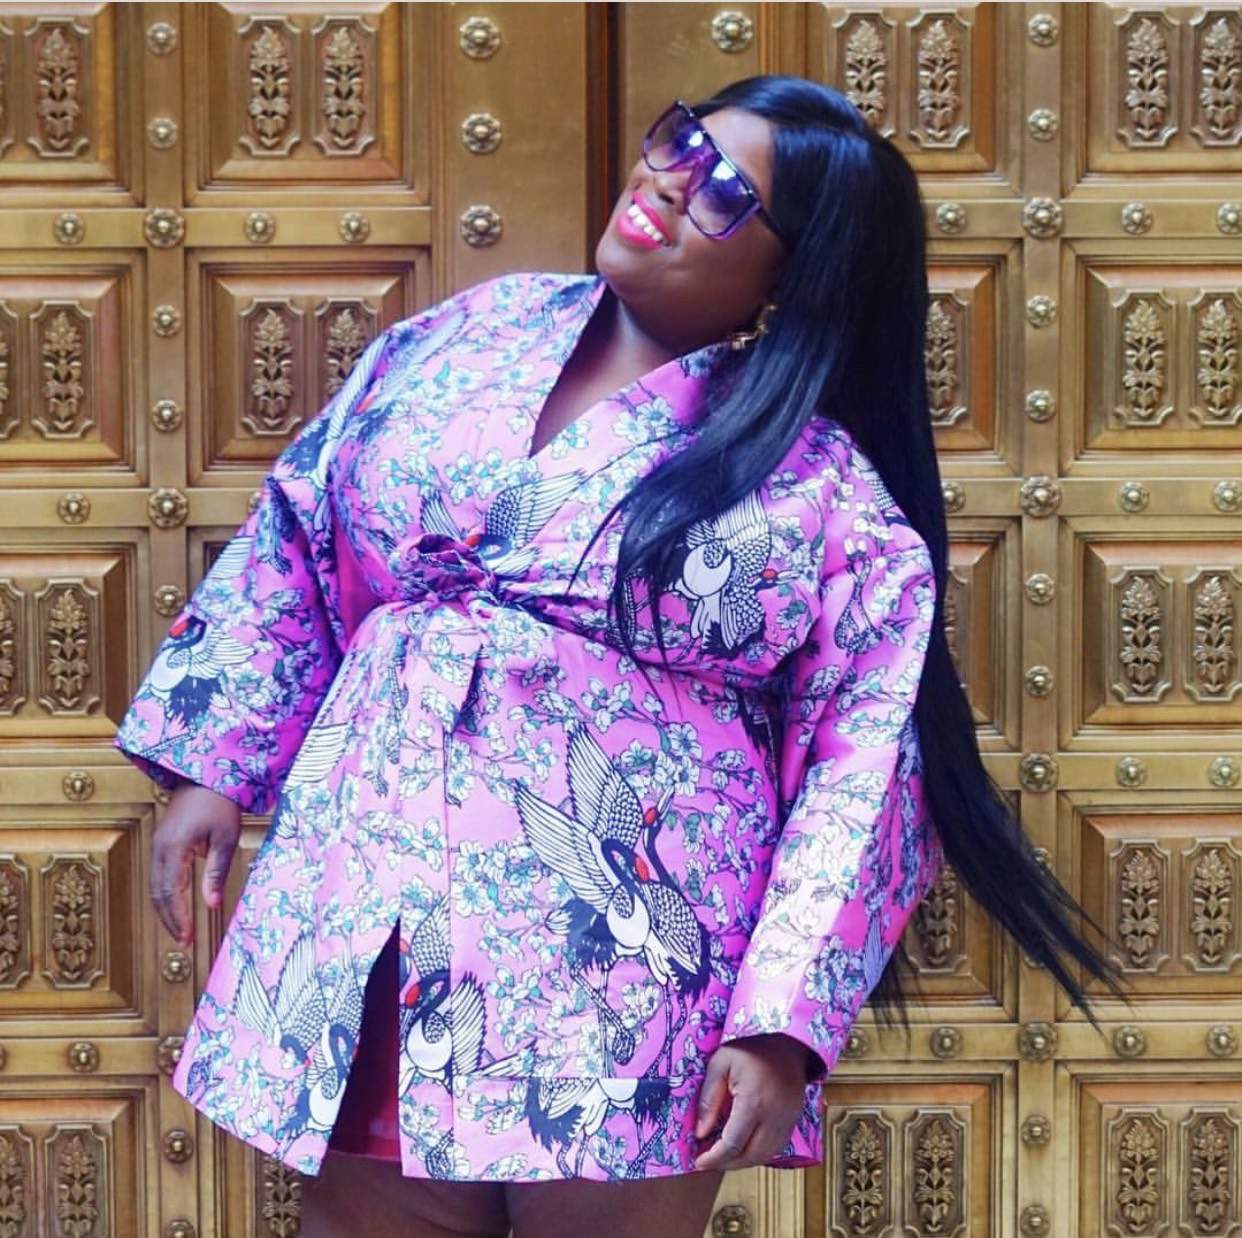 Plus size fashion blogger spotlight: The Fat Girl of Fashion